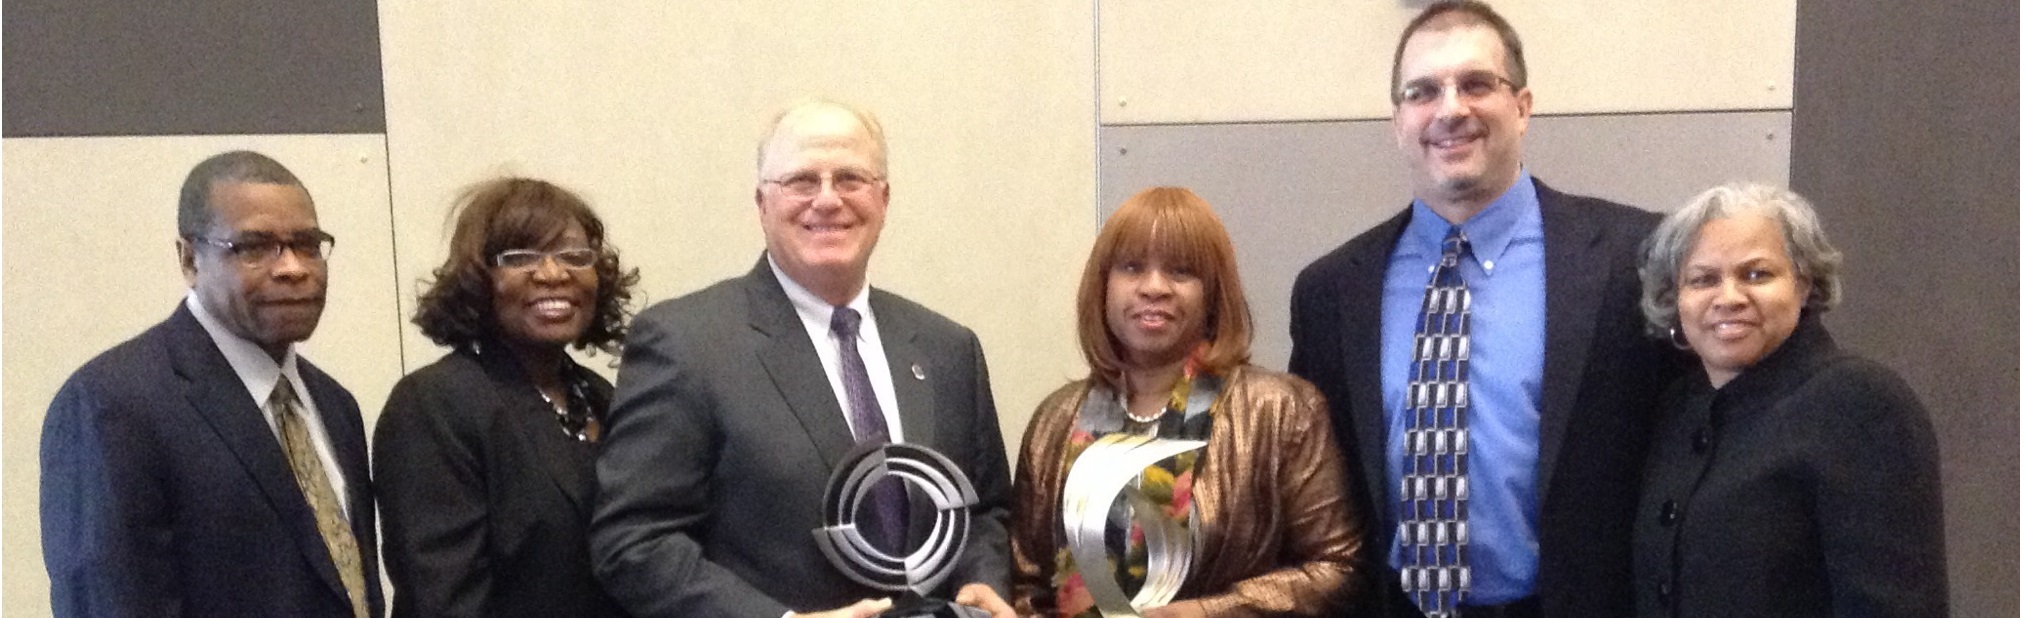  April 3, 2014: RTA recognized for Senior Management Diversity